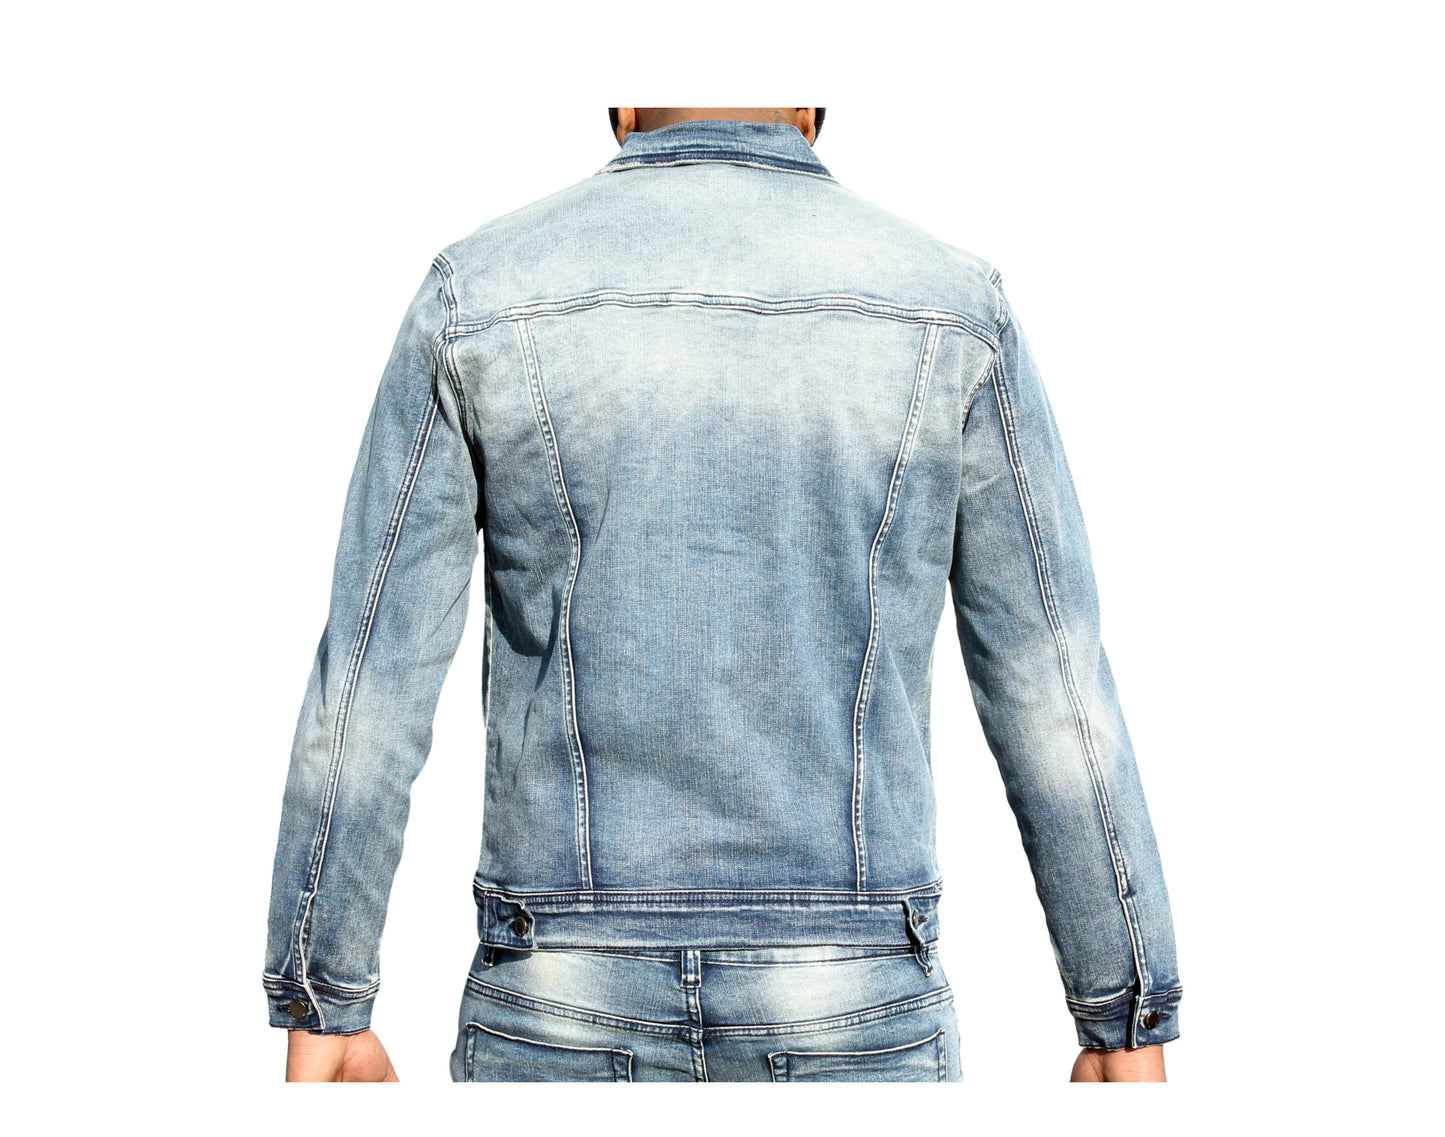 Kilogram Denim Classic Men's Jeans Jacket